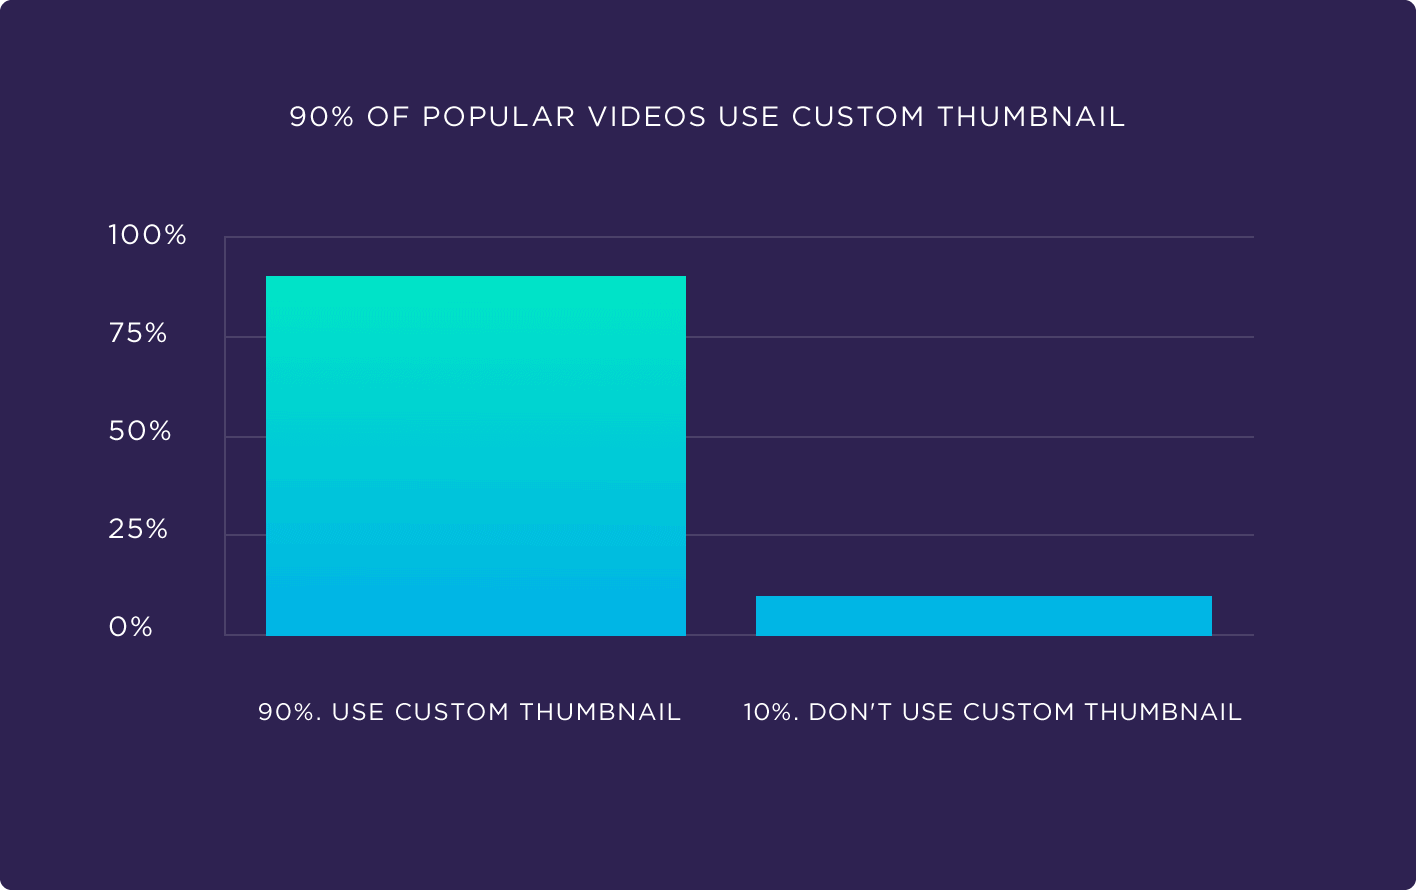 90% of popular videos use custom thumbnail